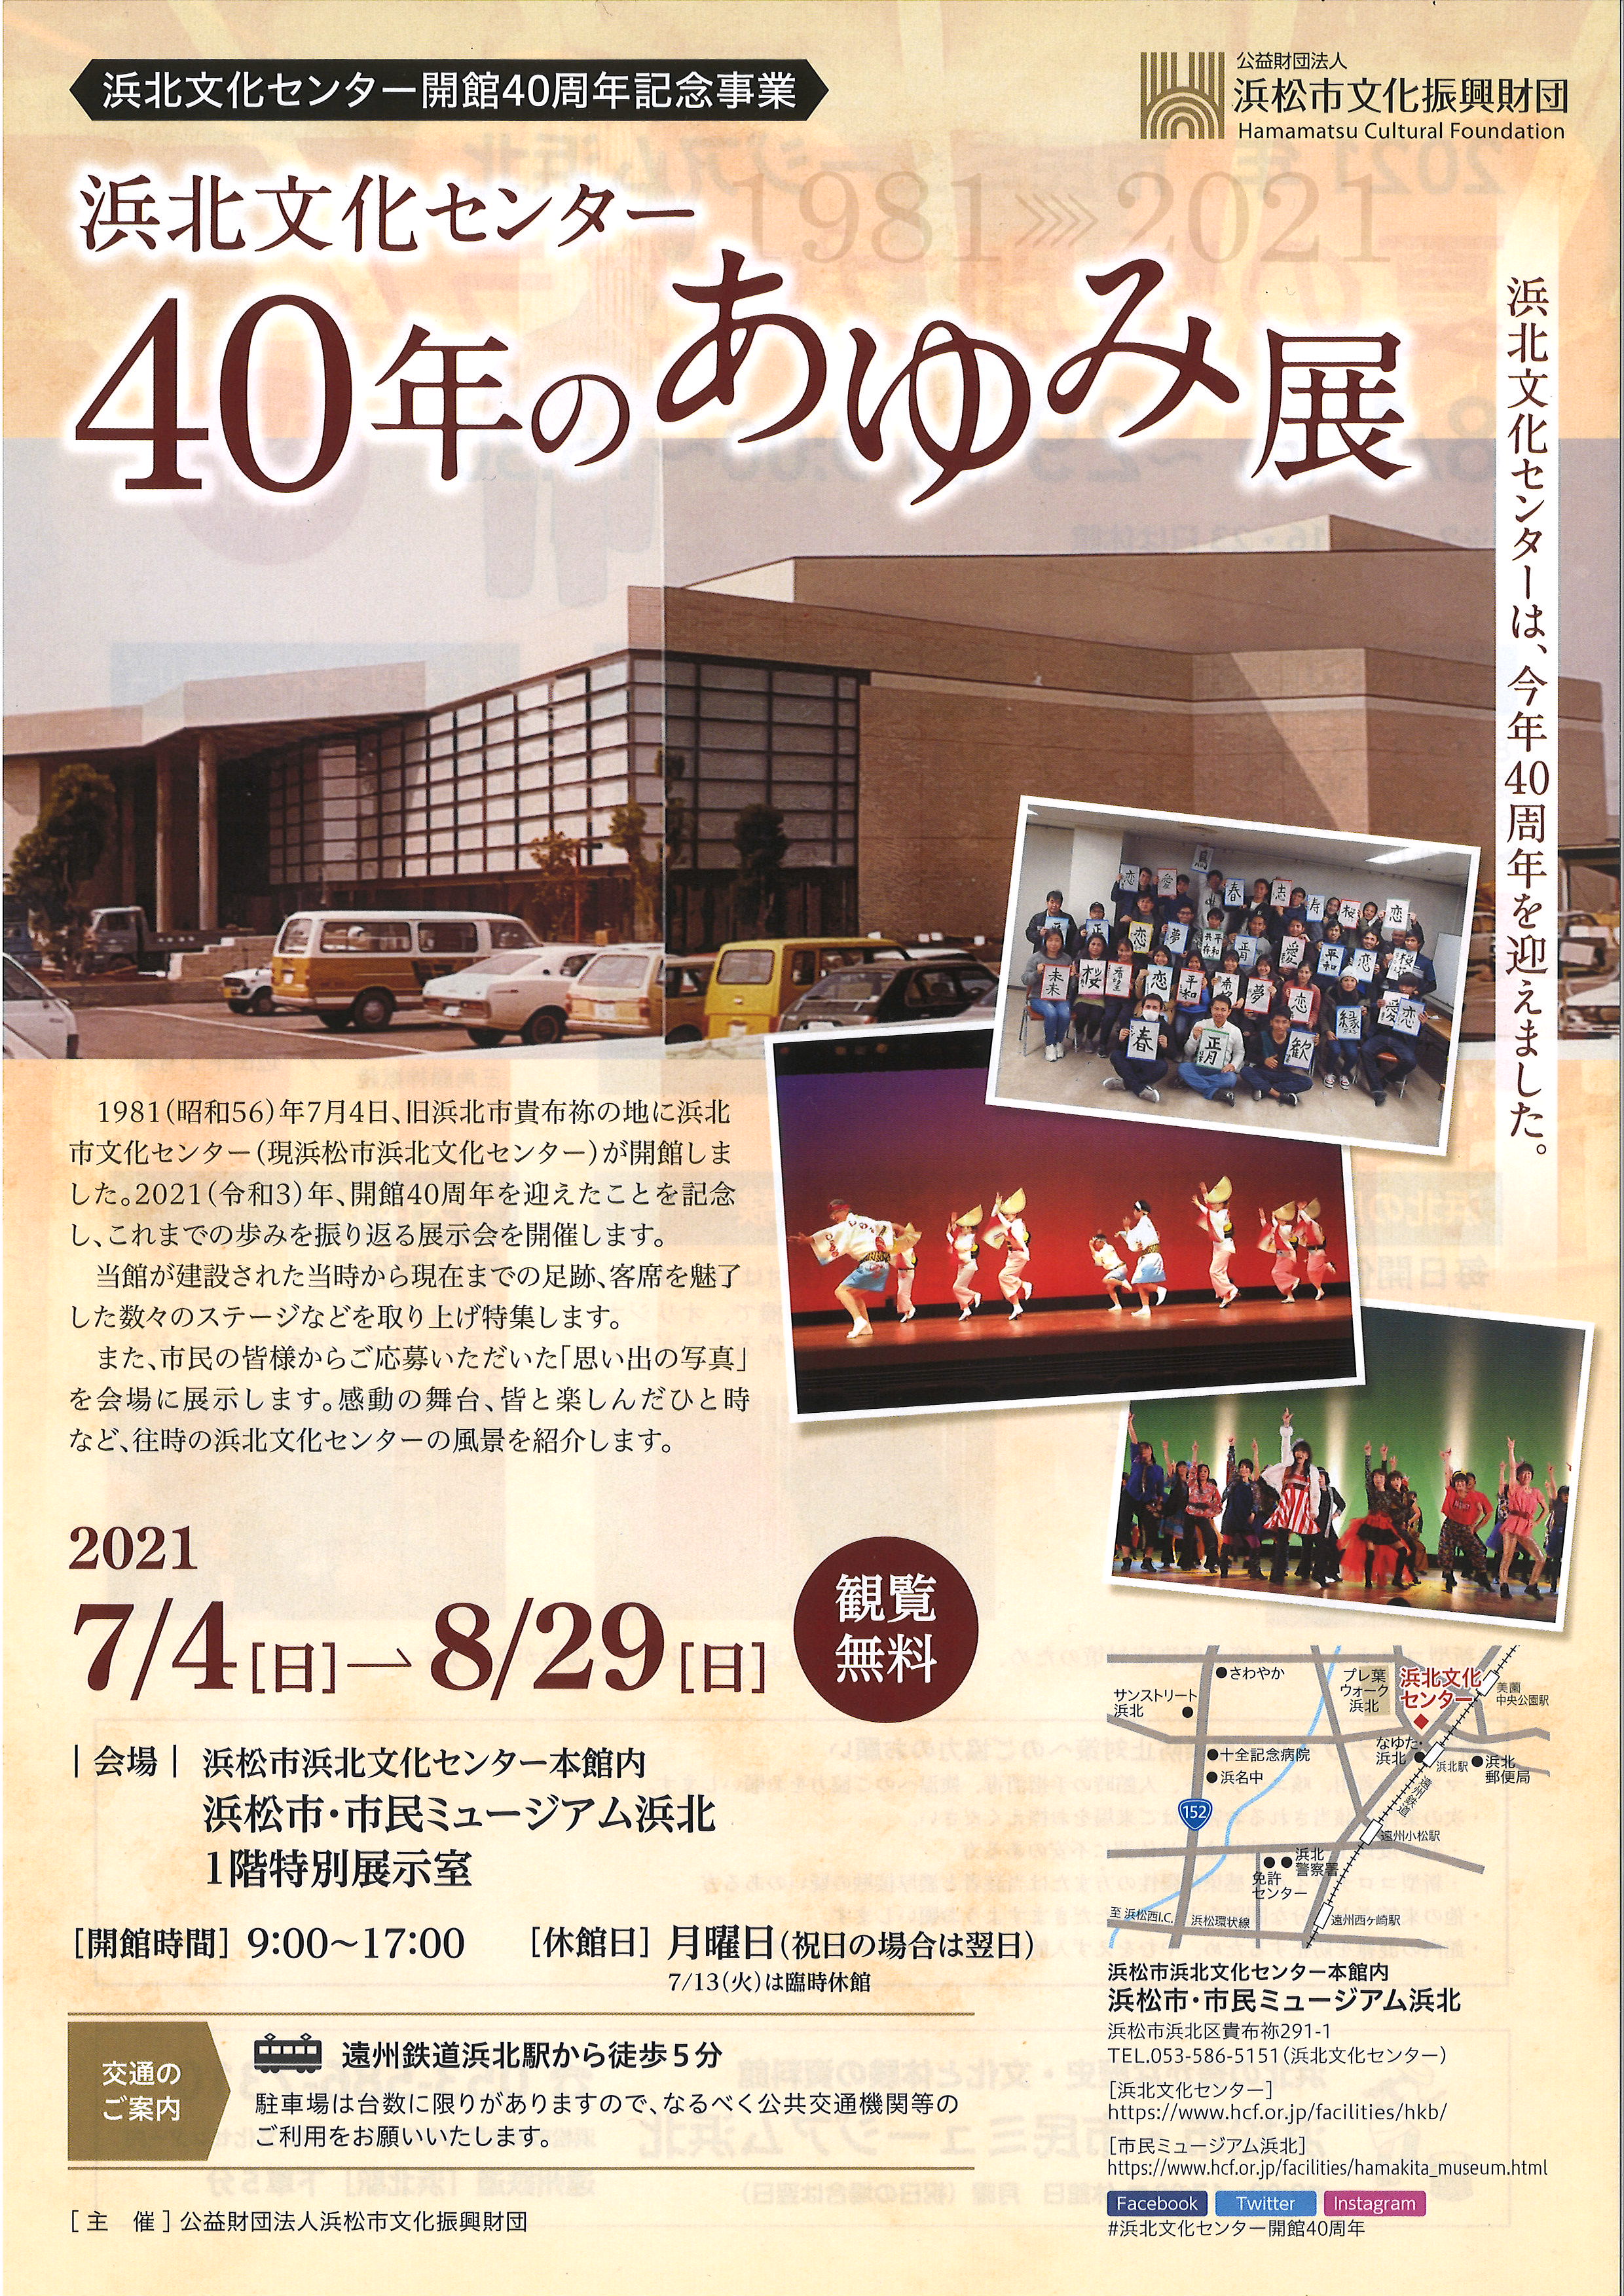 https://www.hcf.or.jp/facilities/hamakita_event/40th.jpg